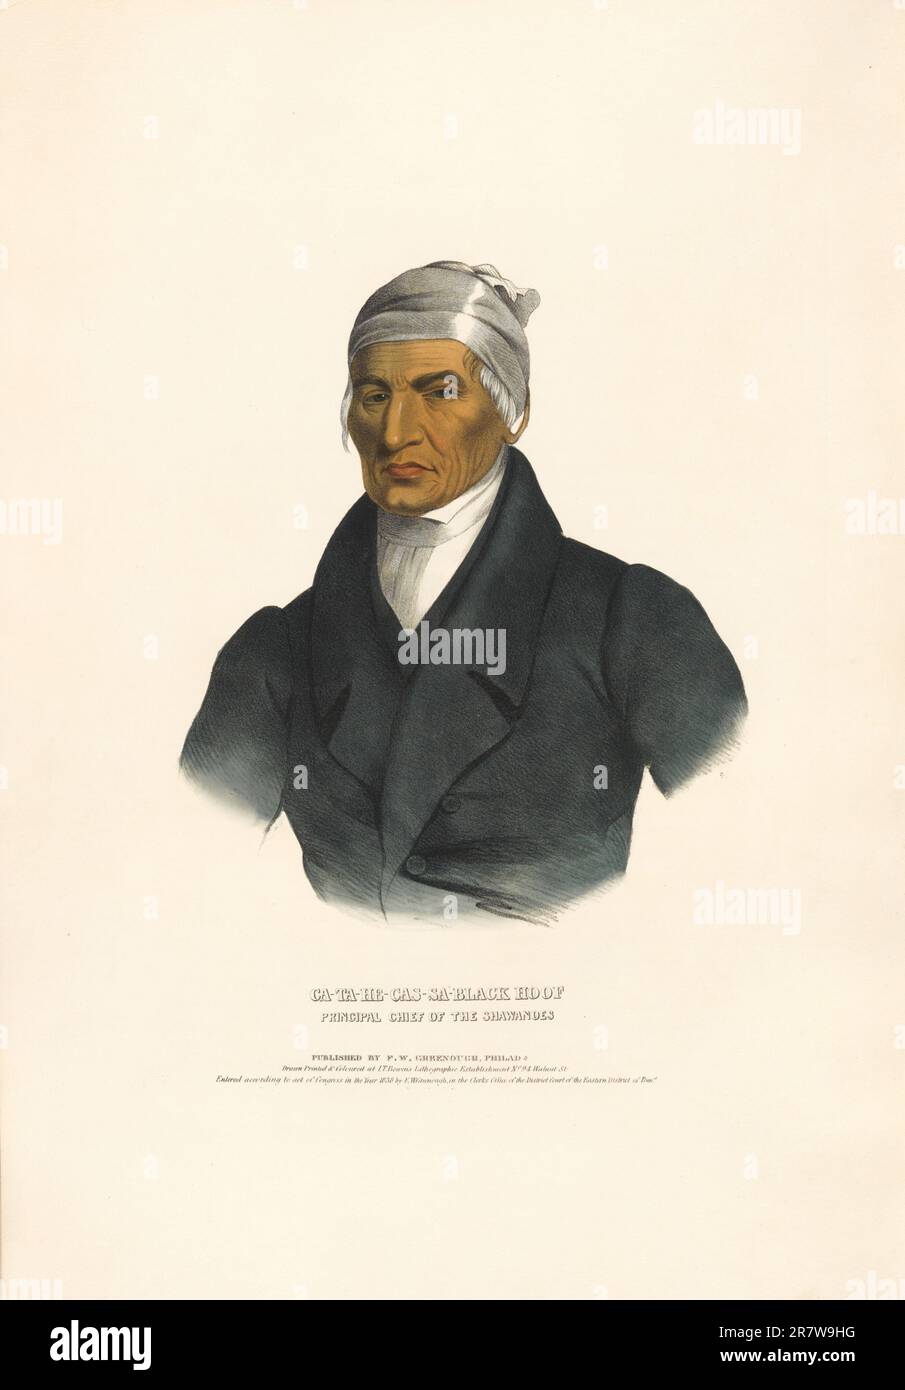 Ca-ta-he-cas-sa - Schwarzer Hufeisen 1838 Stockfoto